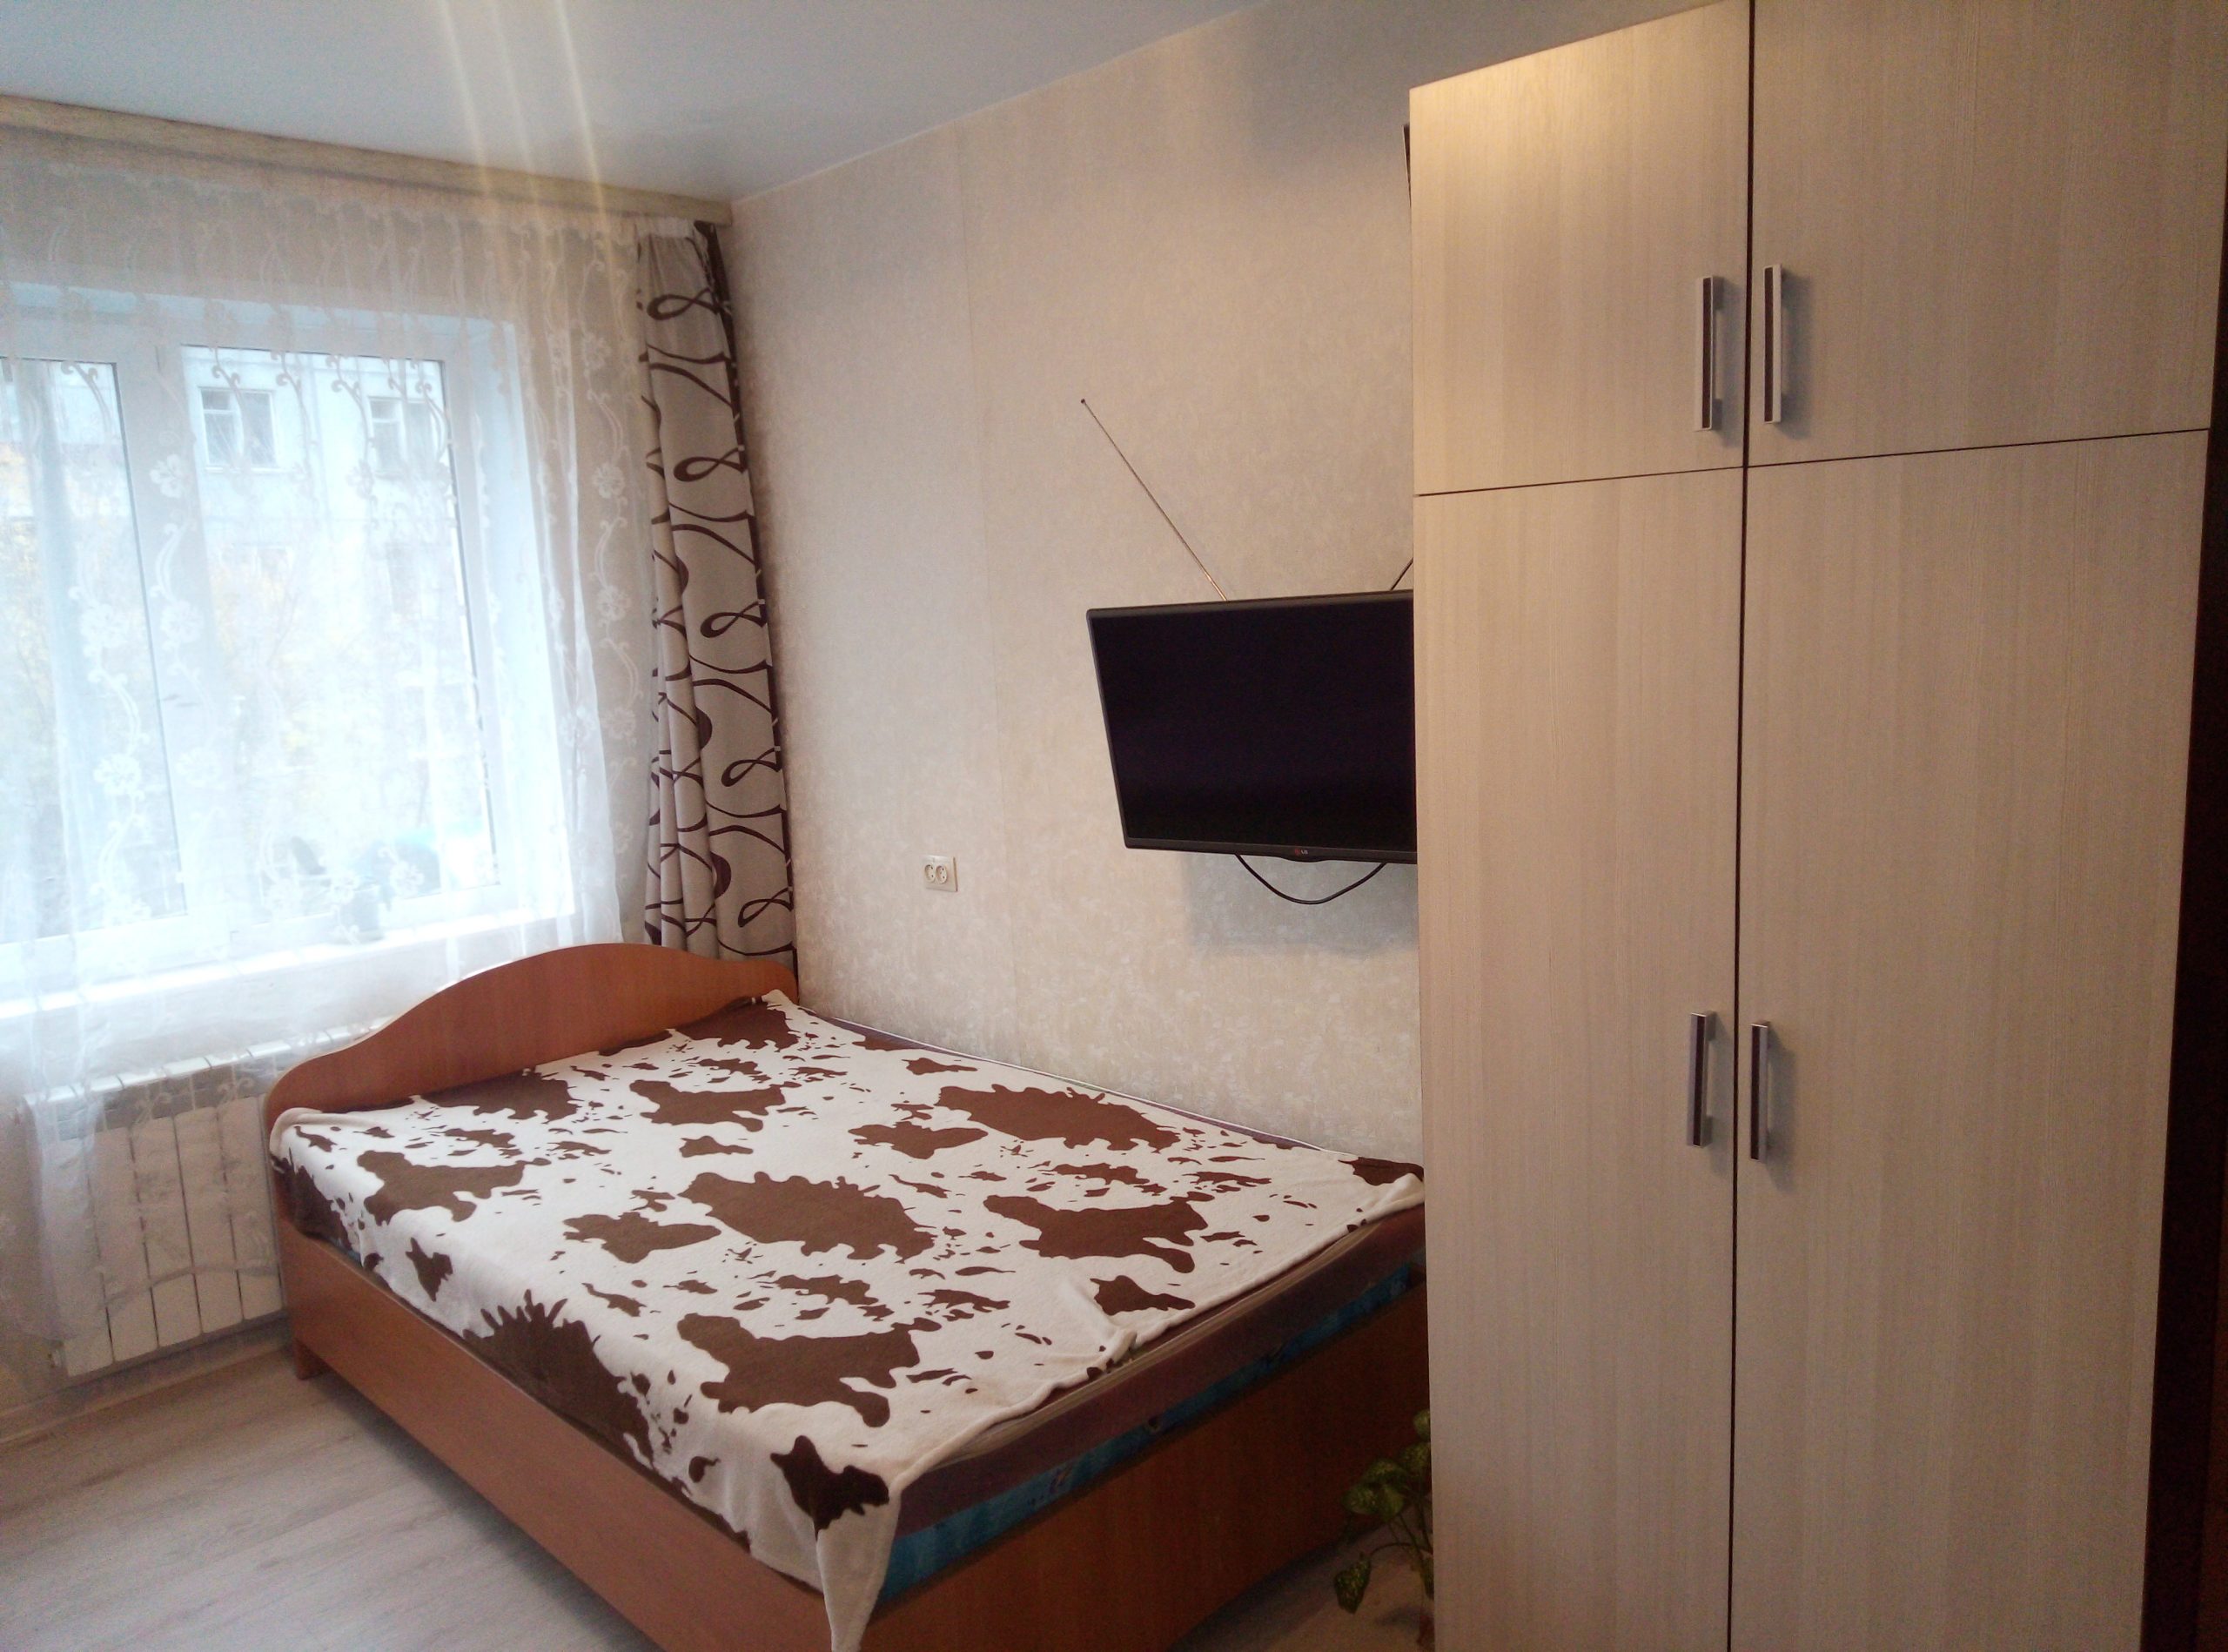 Двухкомнатная квартира на ул. Володарского, 68 (45кв.м)